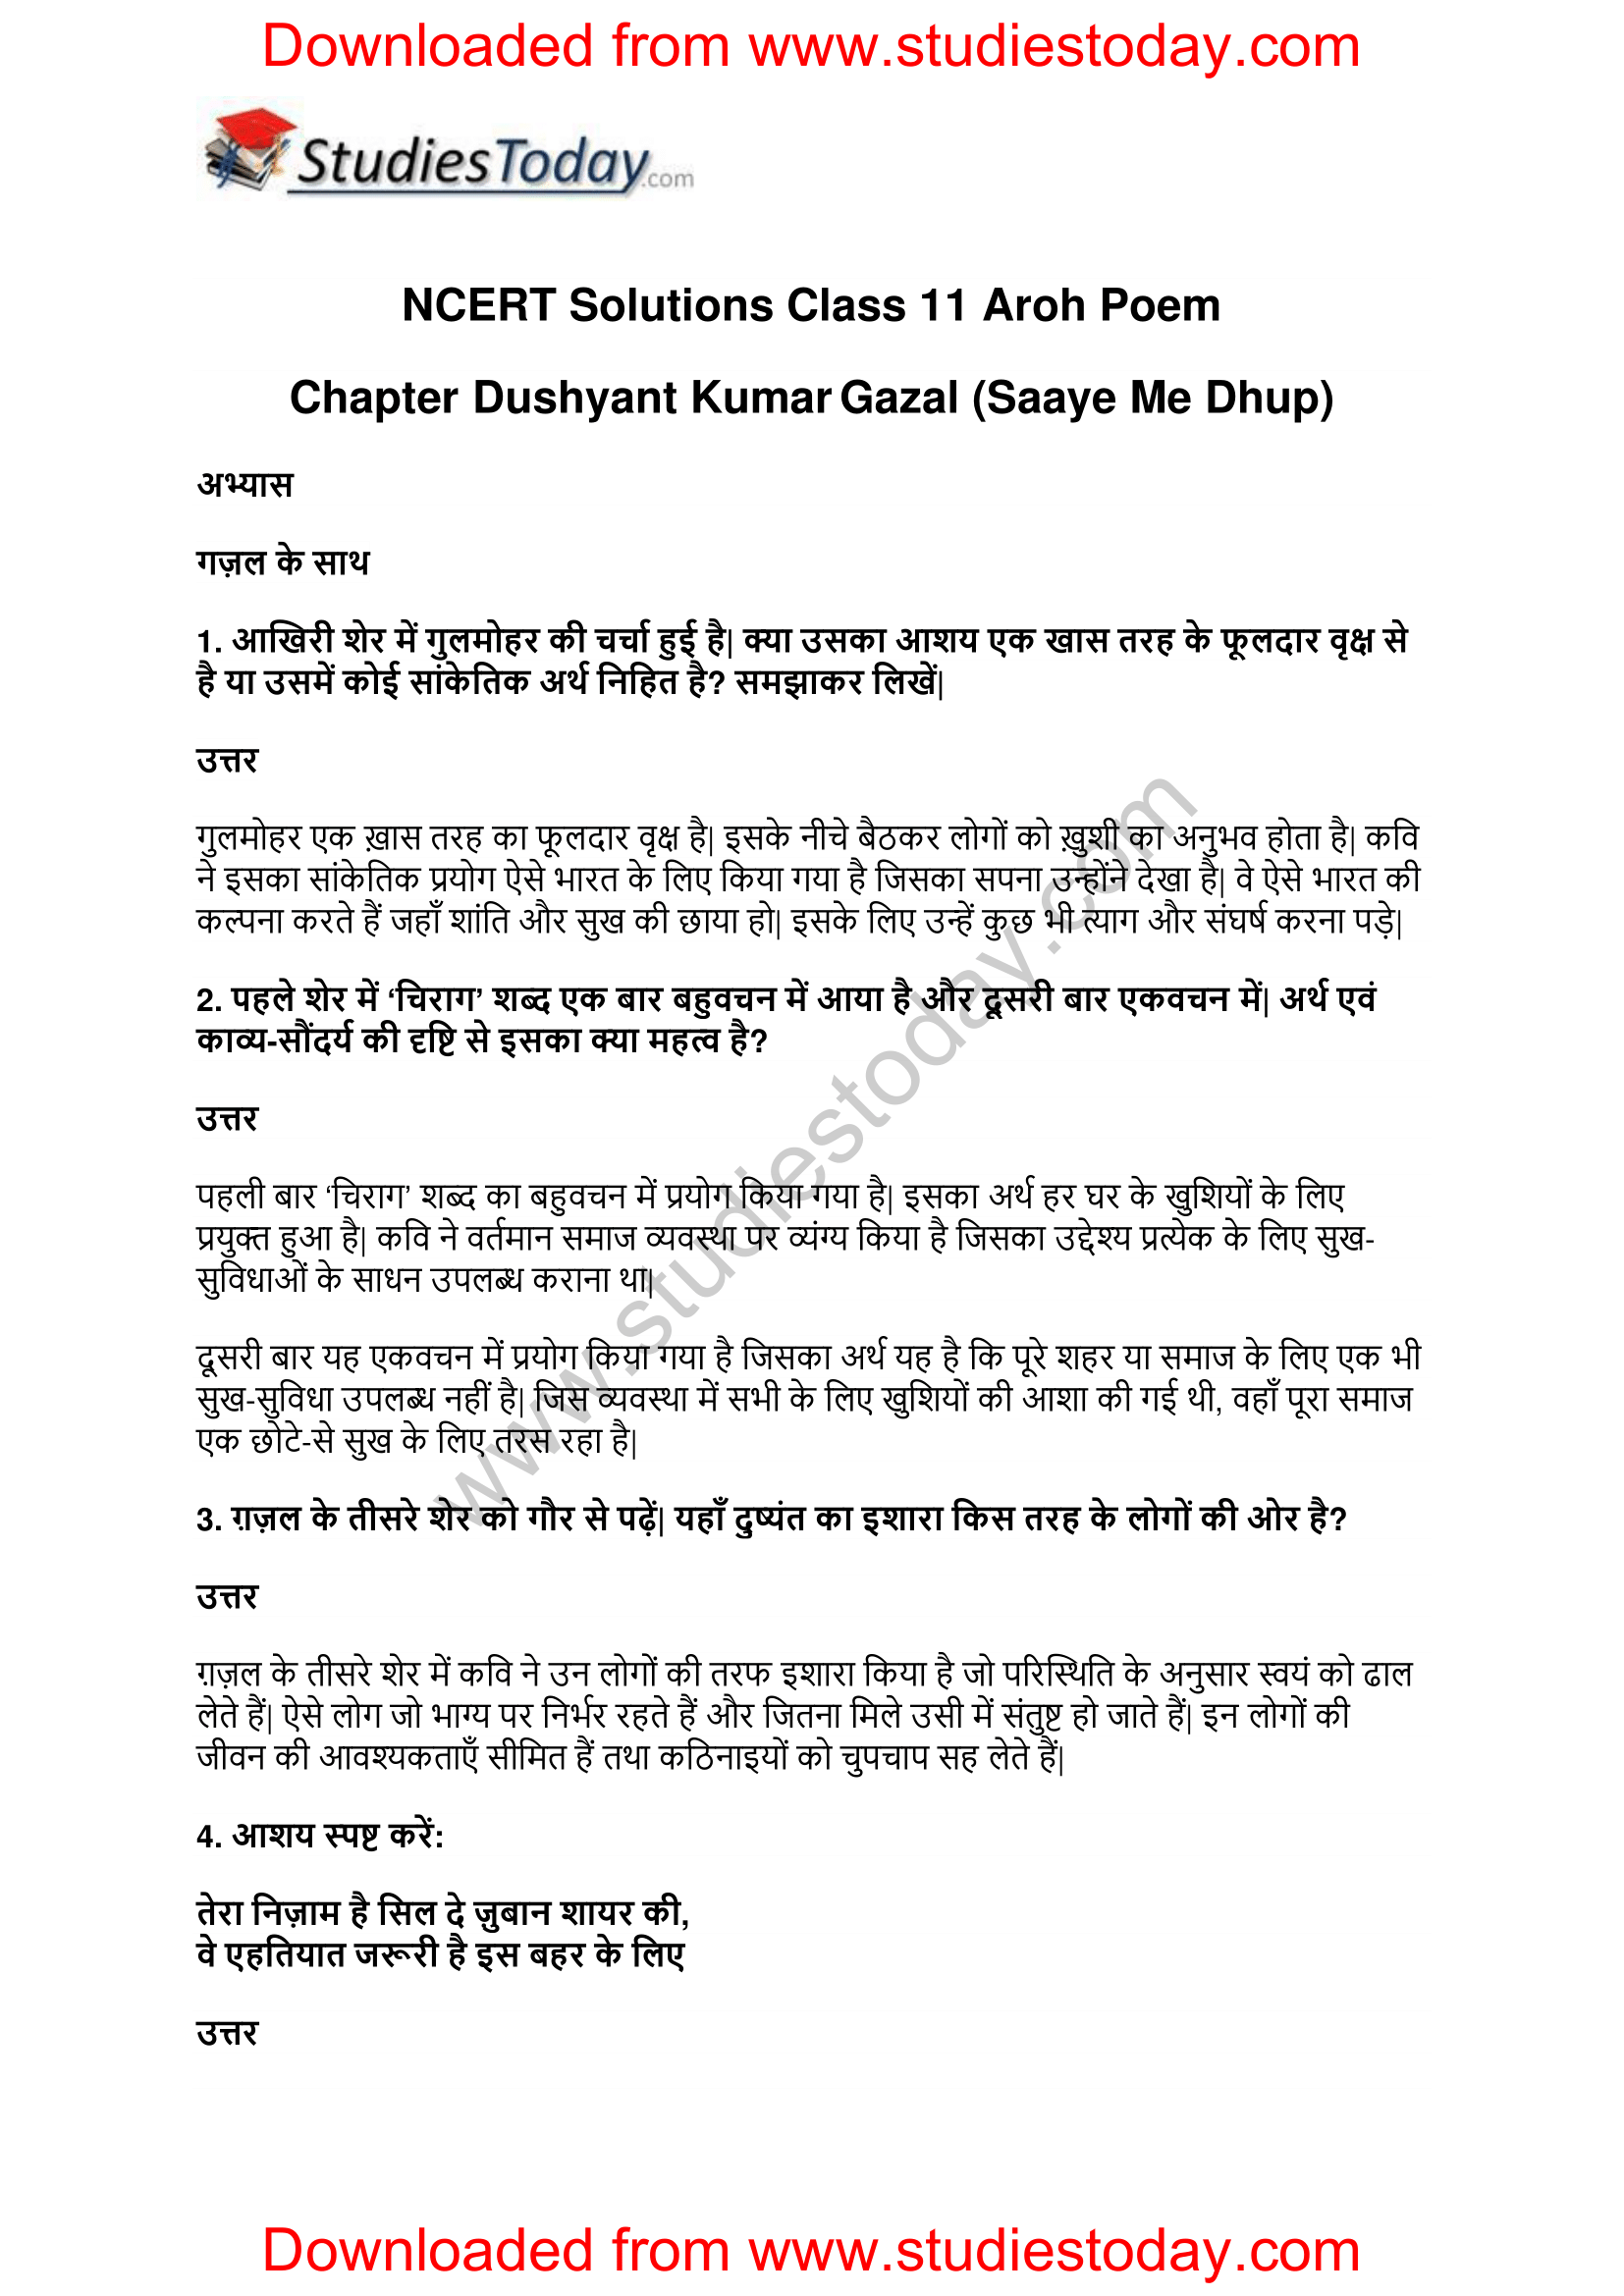 NCERT-Solutions-Class-11-Hindi-Aroh-Poem-Dushyant-Kumar-1